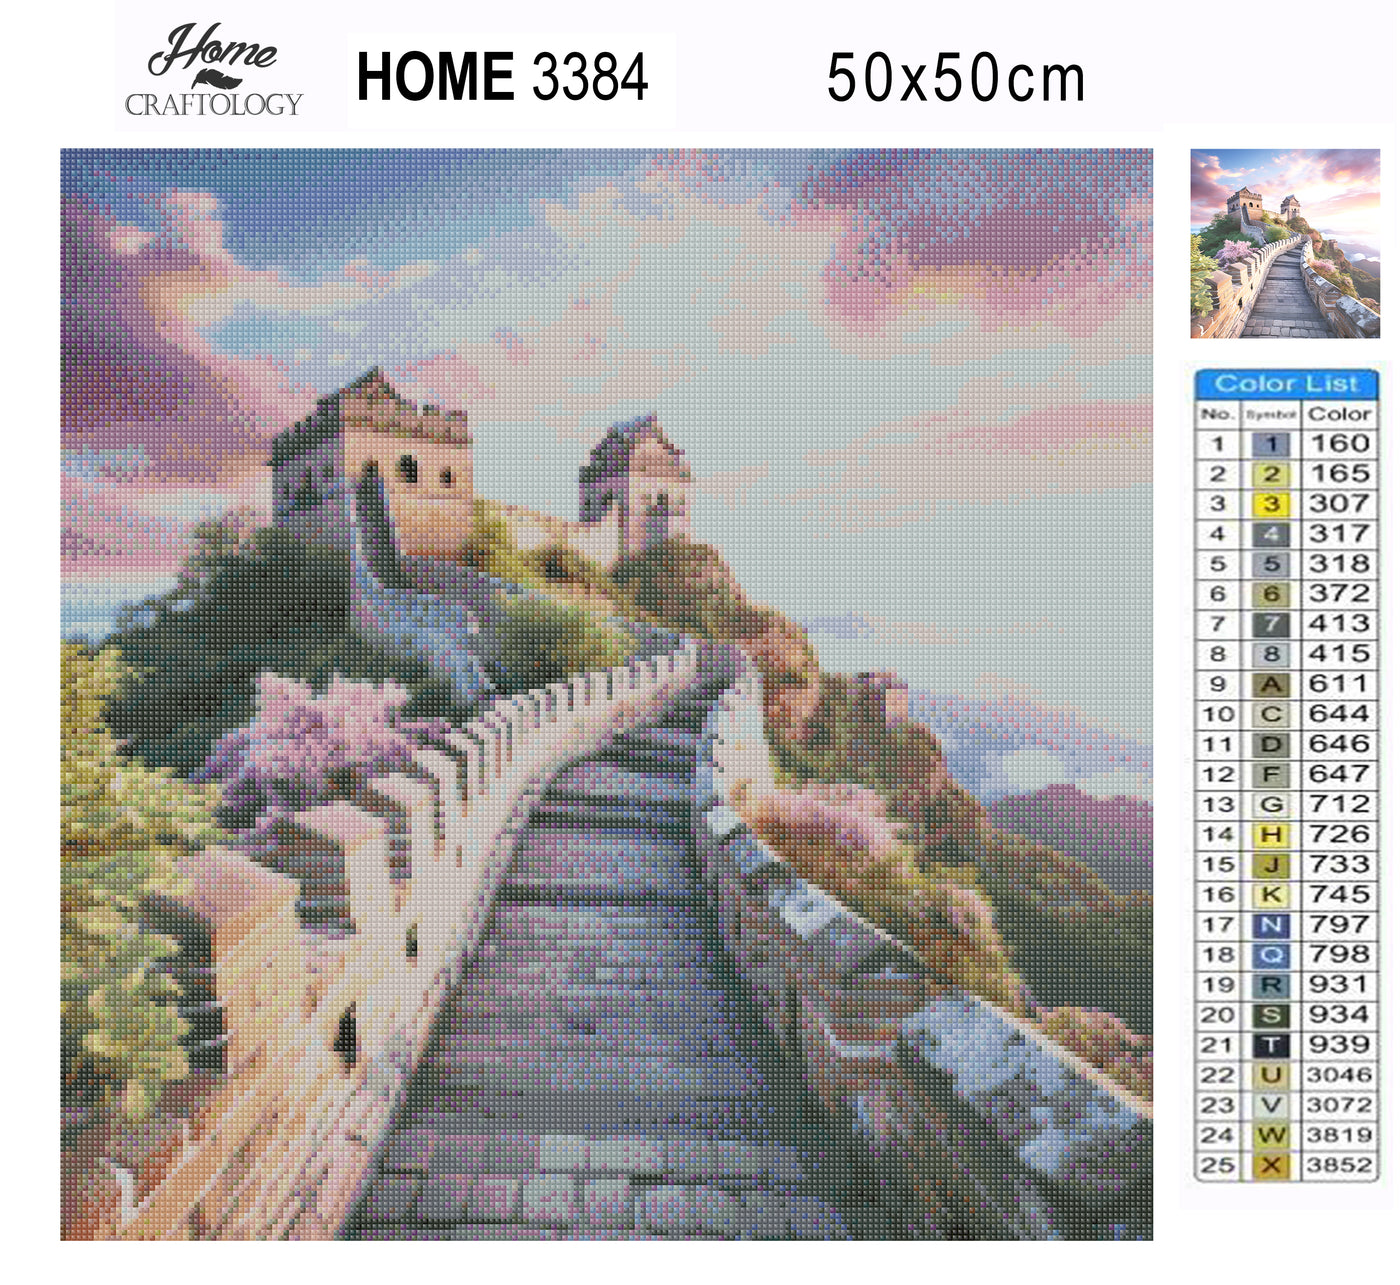 The Great Wall of China - Premium Diamond Painting Kit